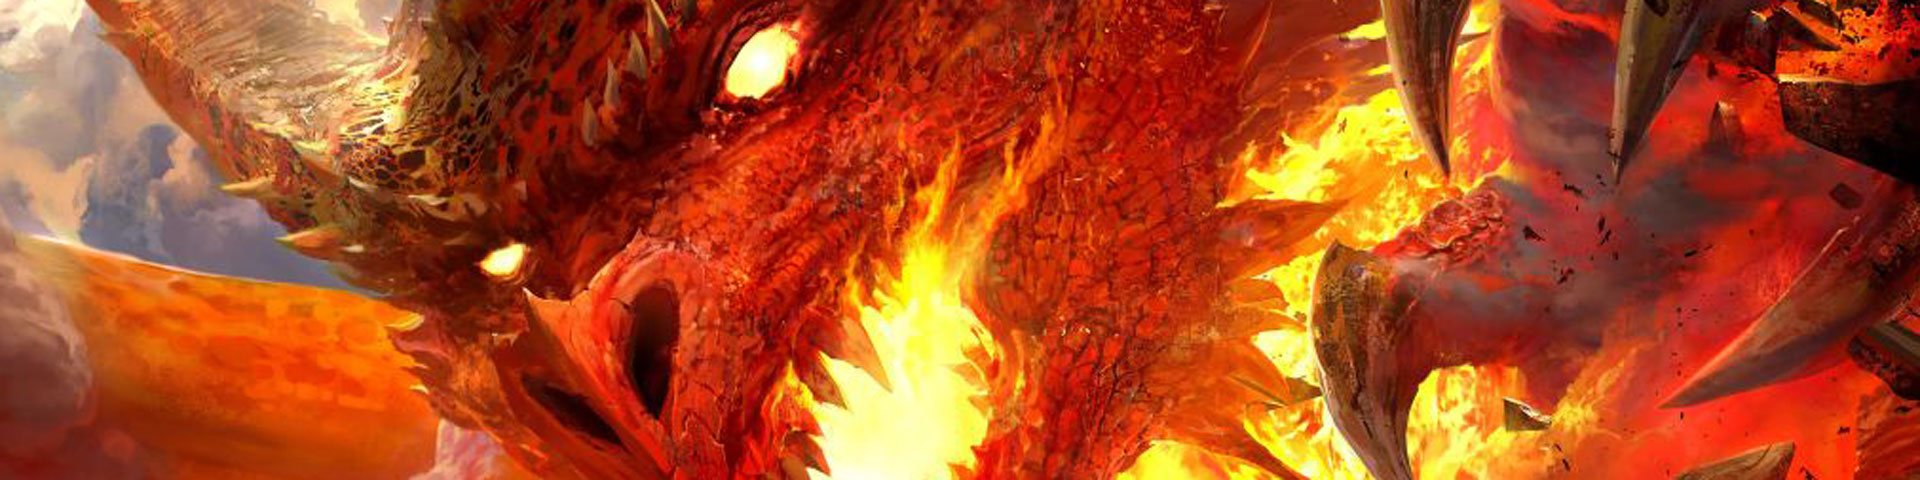 A red dragon prepares to breath fire.